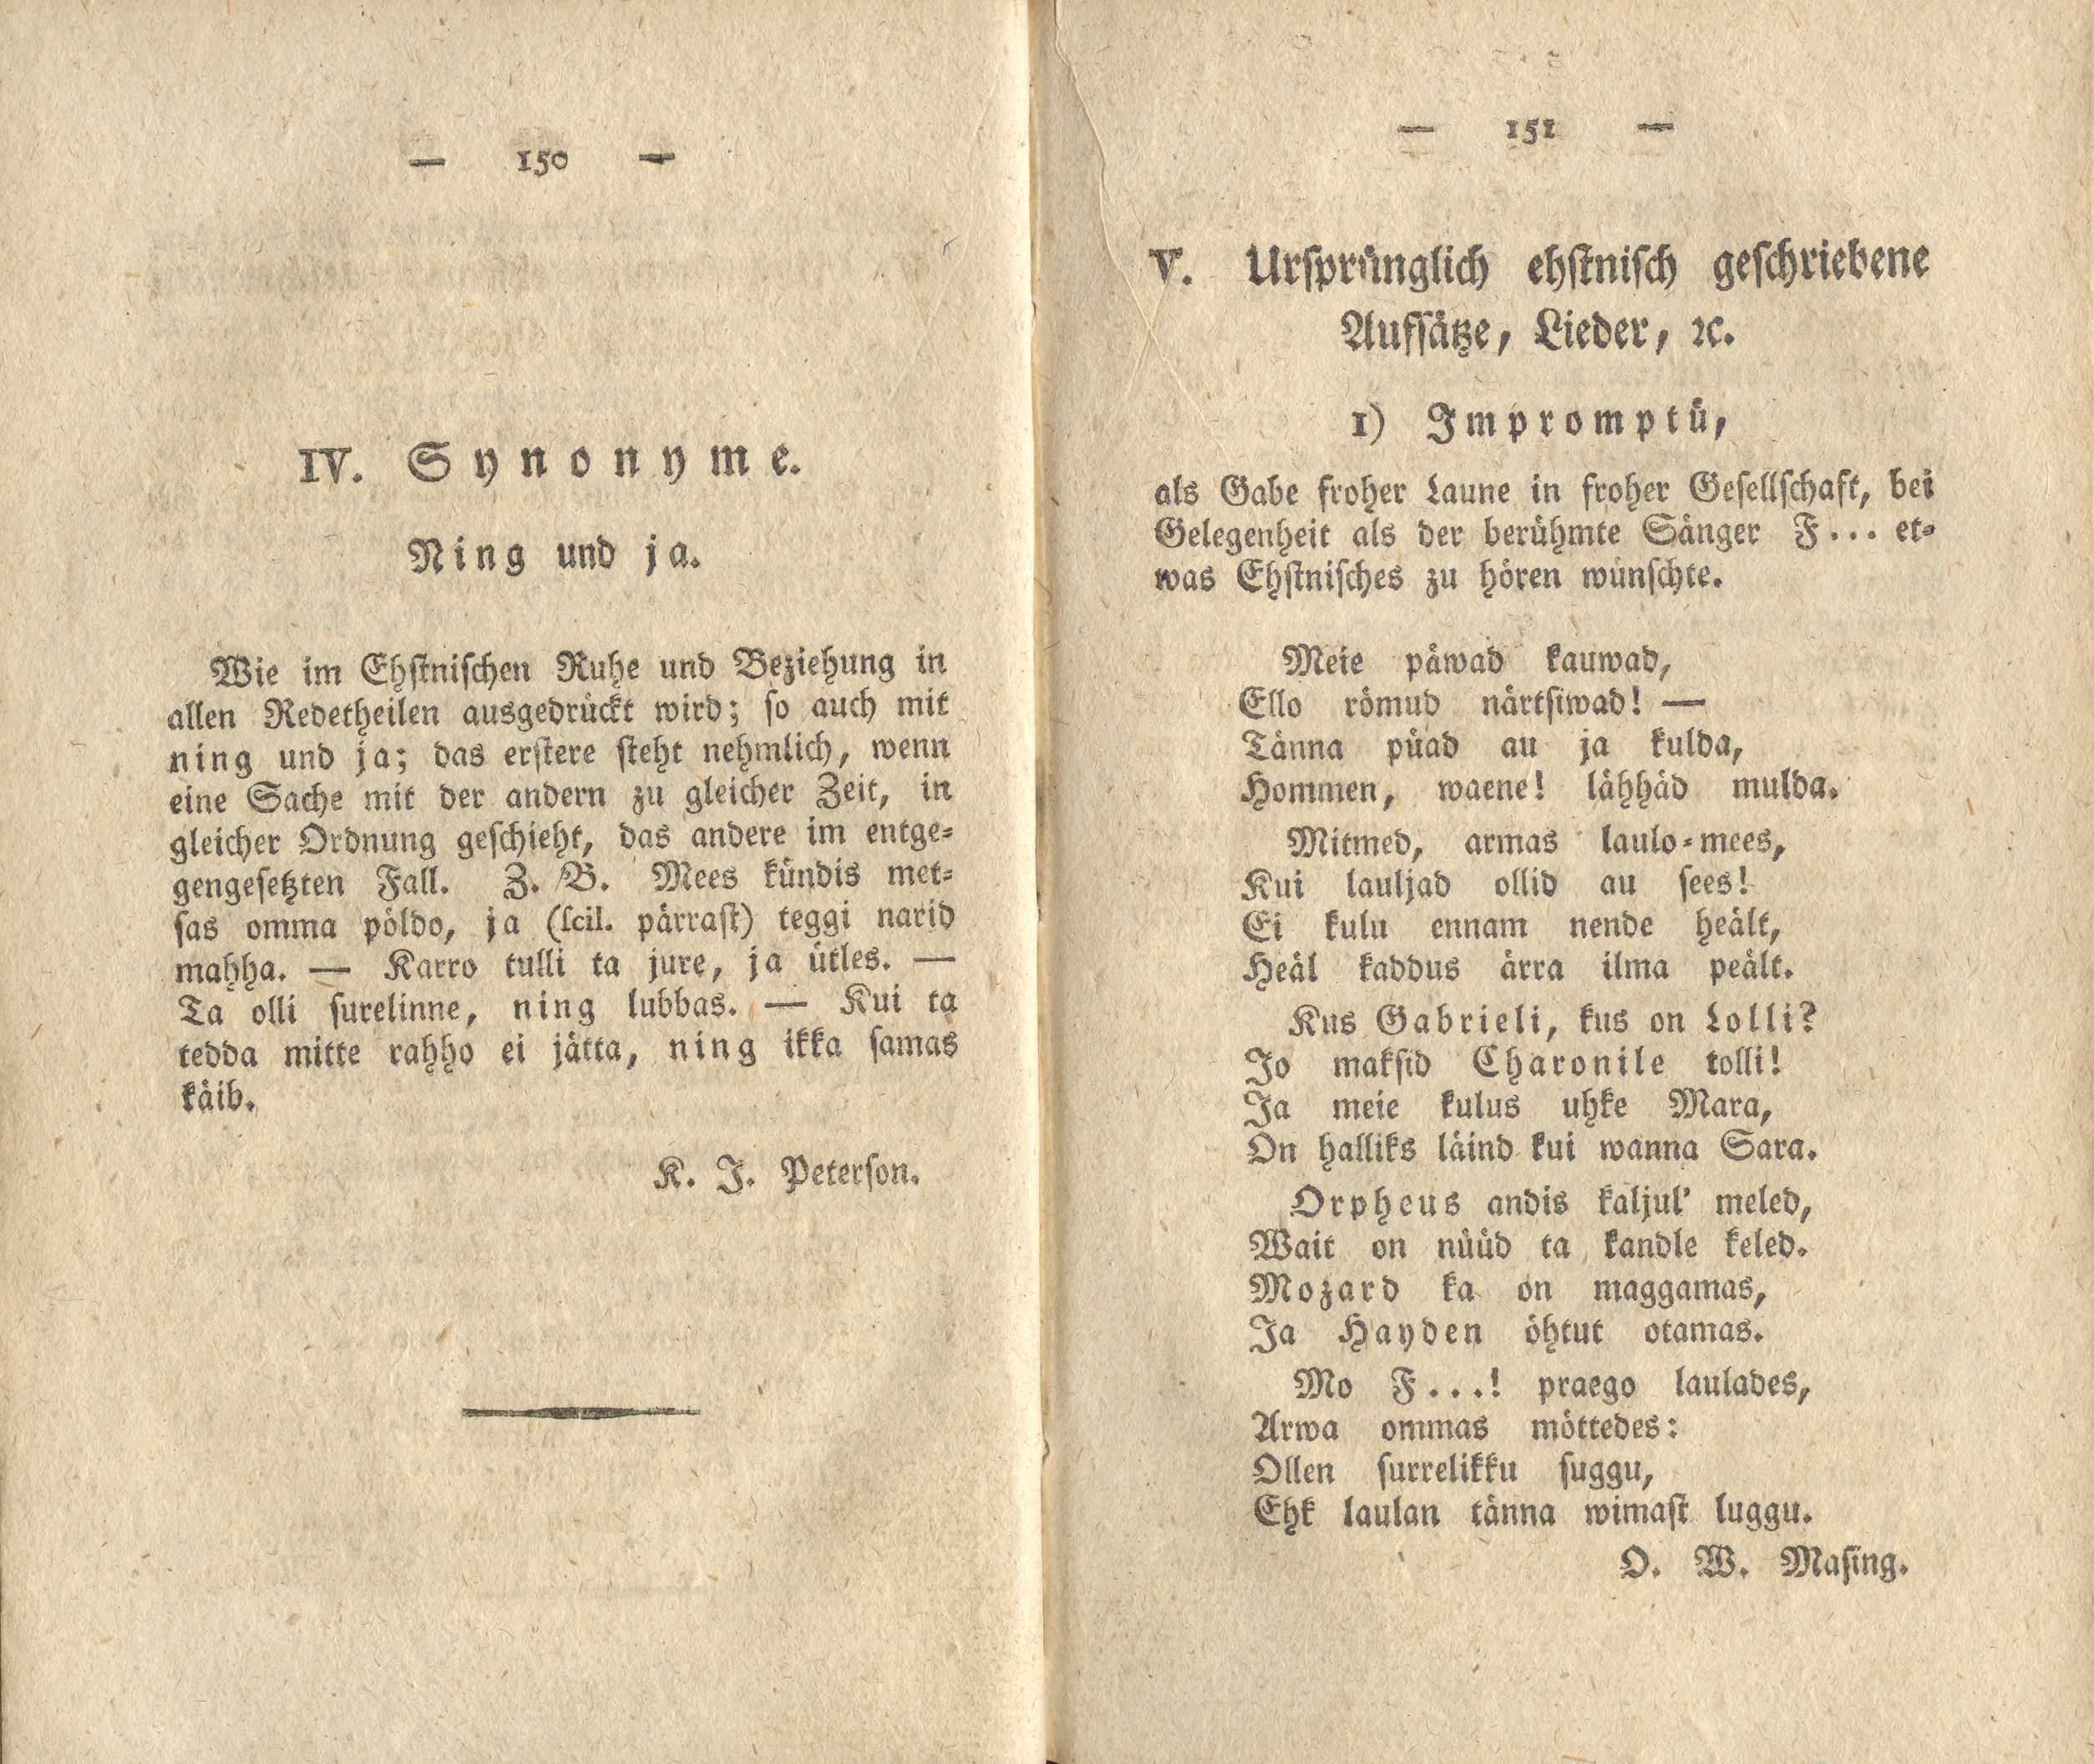 Ning und ja (1818) | 1. (150-151) Основной текст